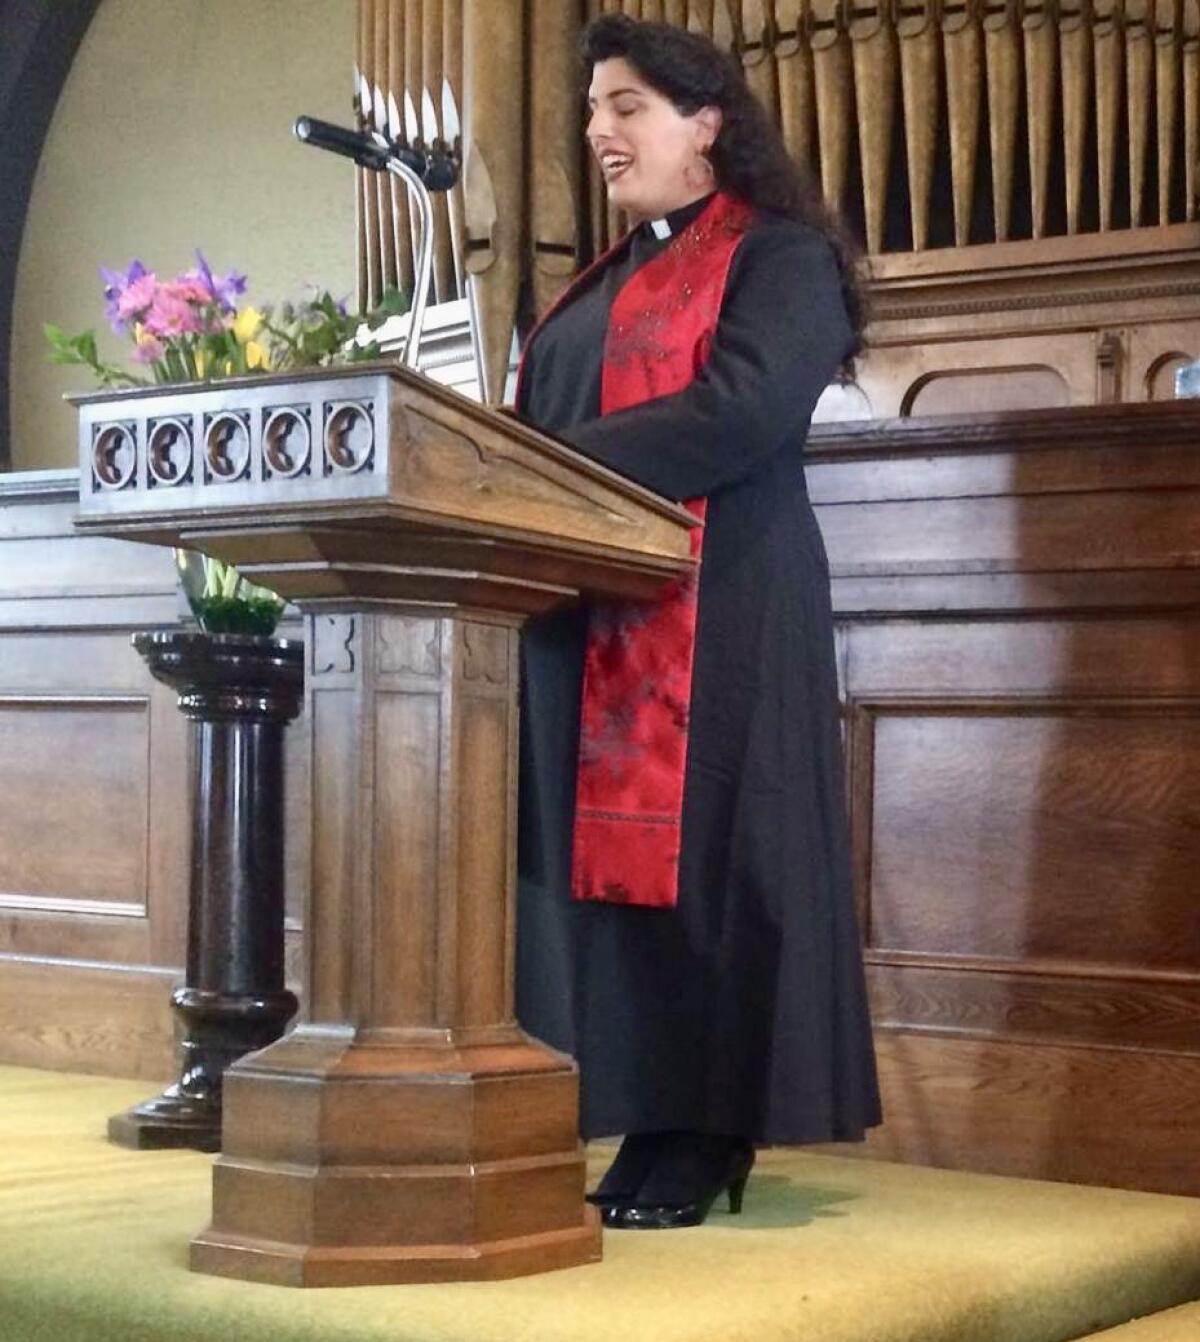 Elena Rose Vera, executive director of Trans Lifeline, at her ordination ceremony in 2016.